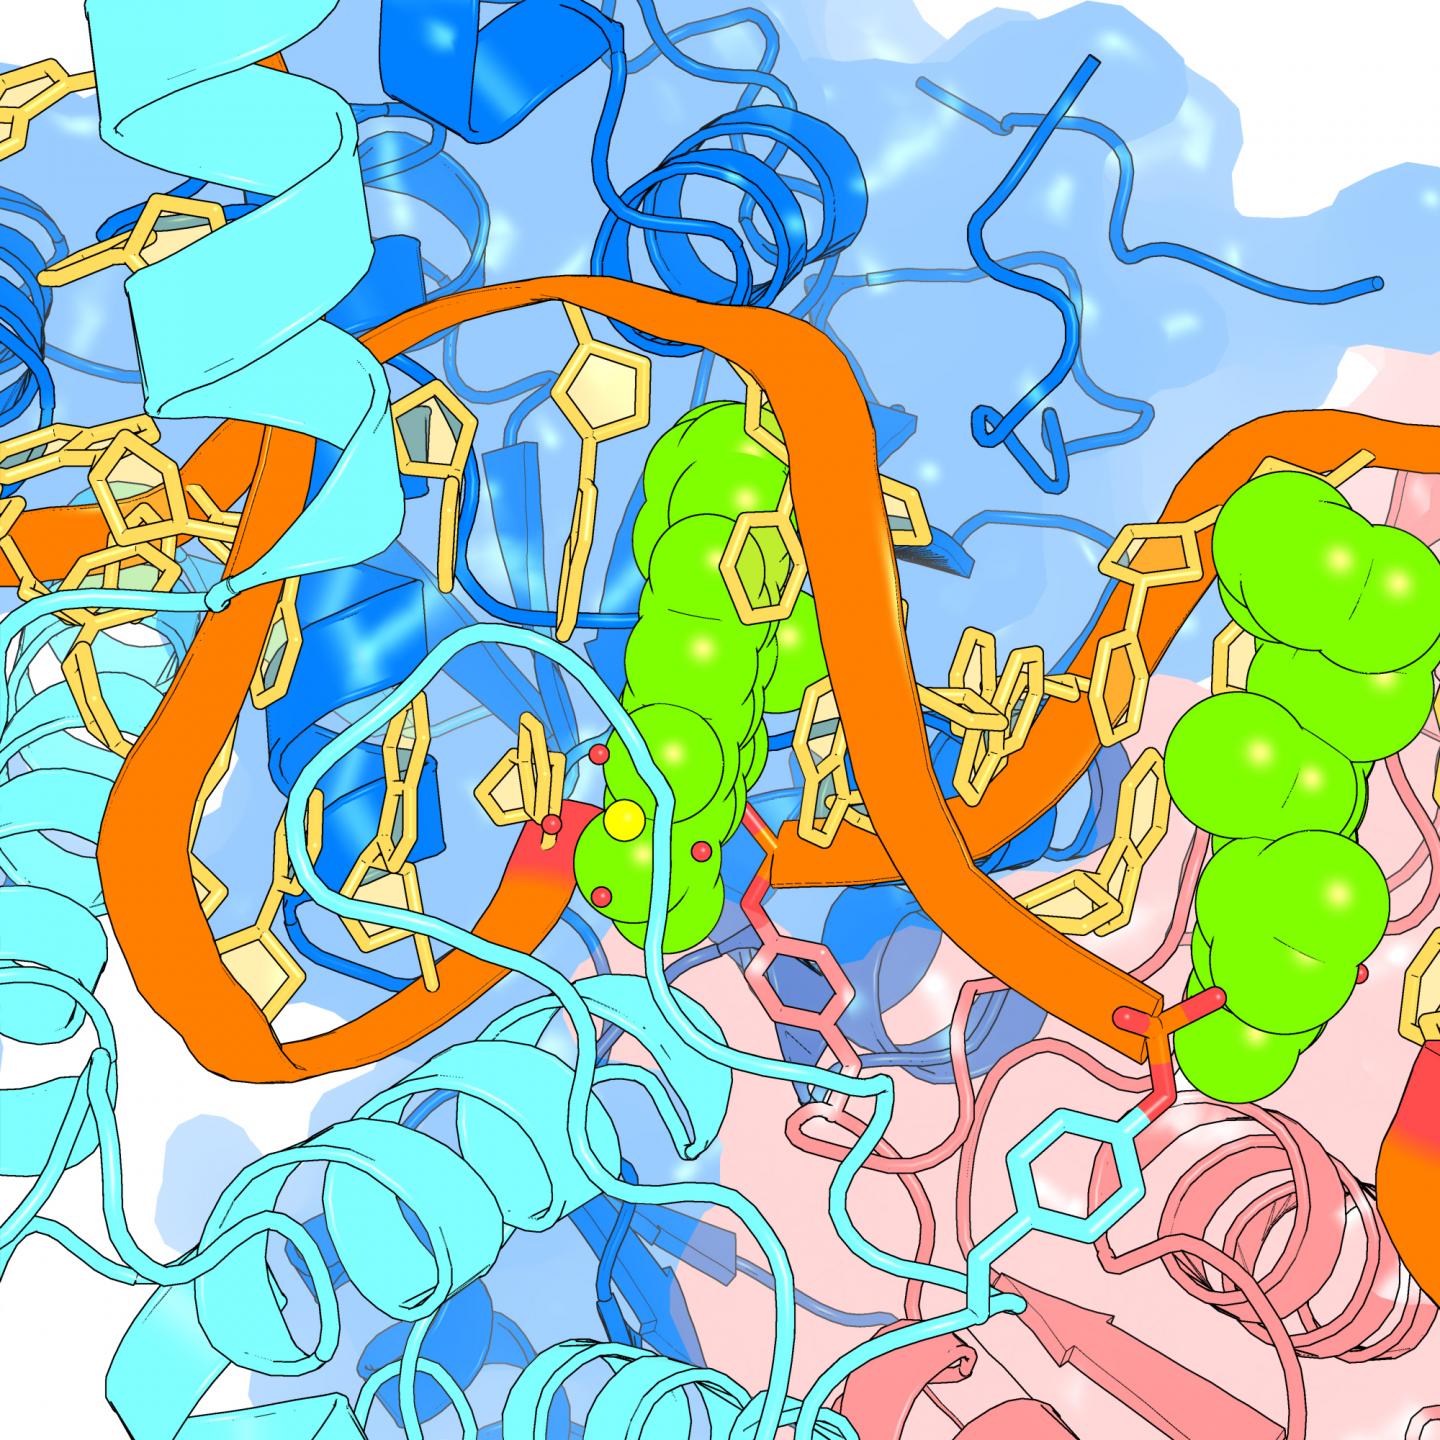 Moxifloxacin Interacts with TB's Gyrase Enzyme